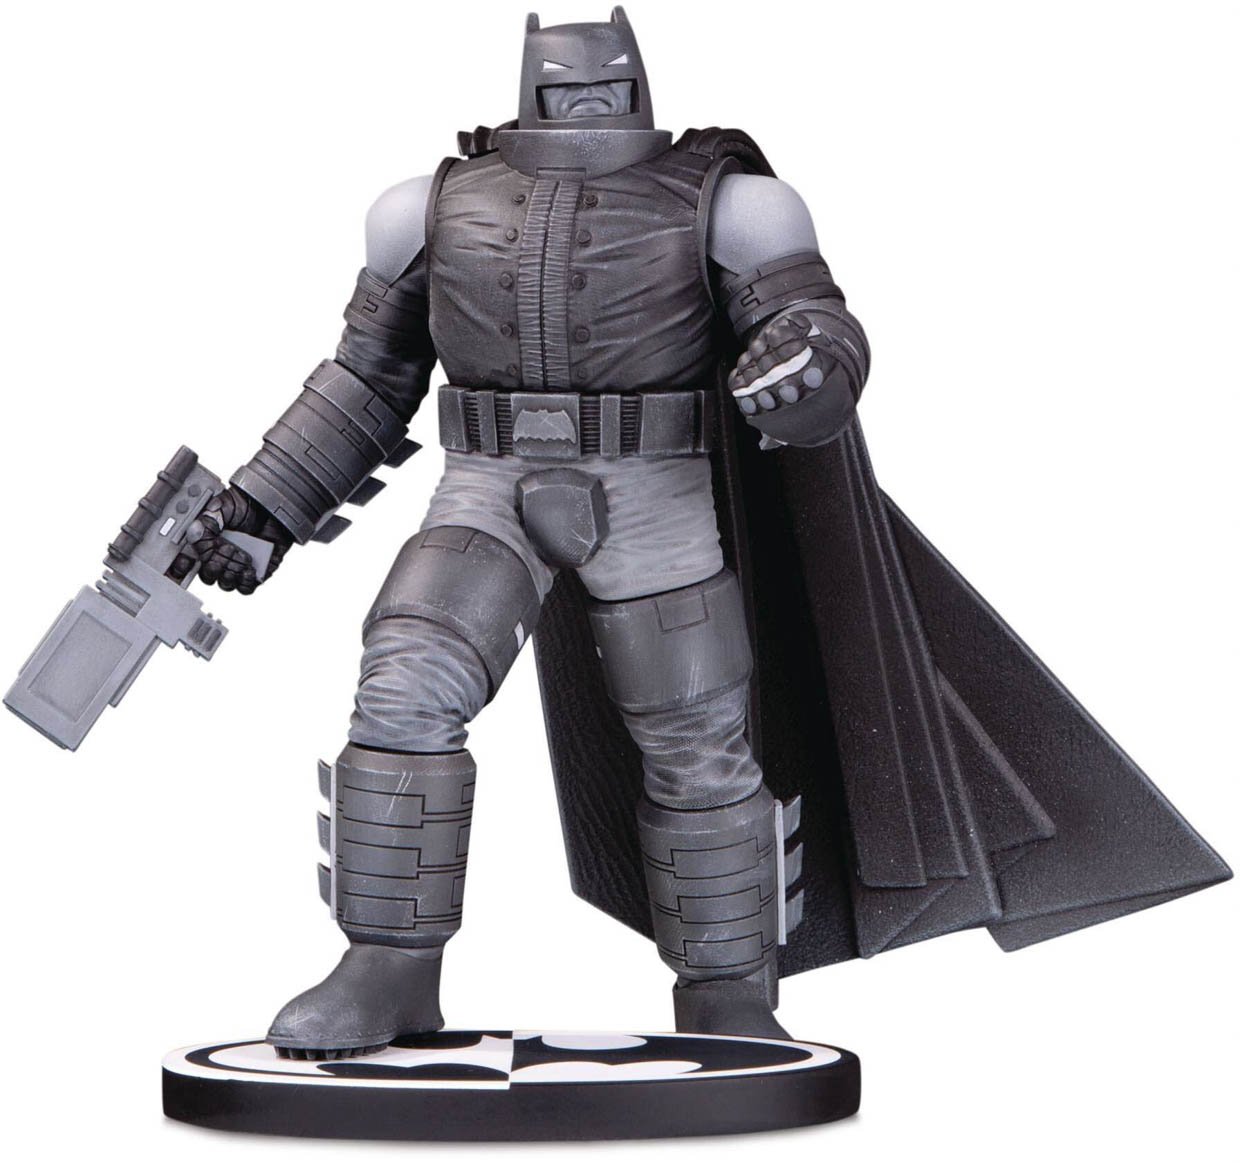 Armored Black and White Batman Statue